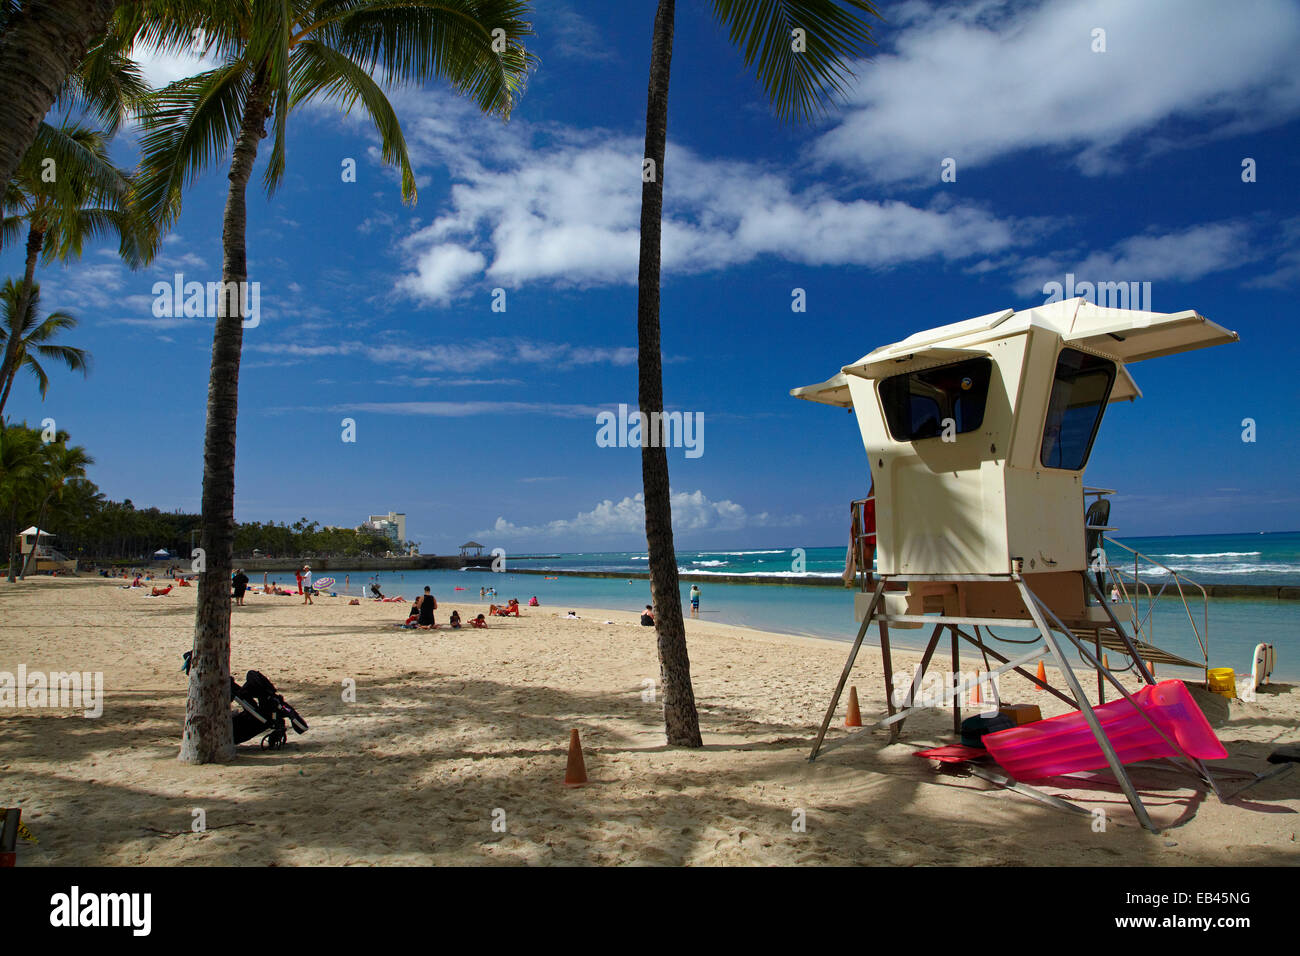 Surf lifesavers torre di guardia, il Waikiki Beach e palme, Waikiki, Honolulu Oahu, Hawaii, STATI UNITI D'AMERICA Foto Stock